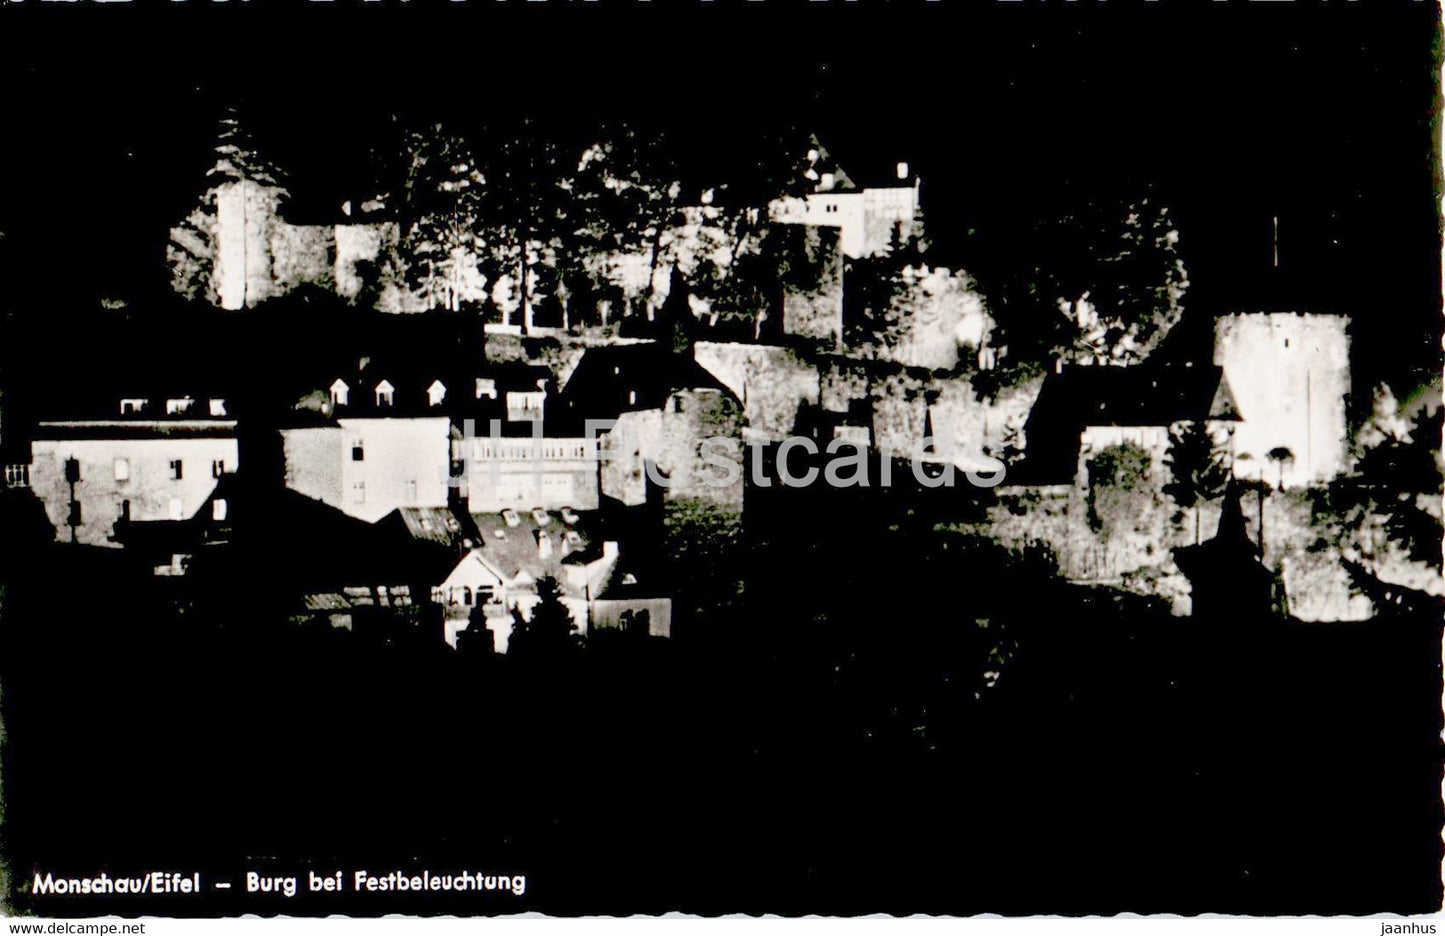 Monschau - Burg bei Festbeleuchtung - castle - old postcard - Germany - unused - JH Postcards